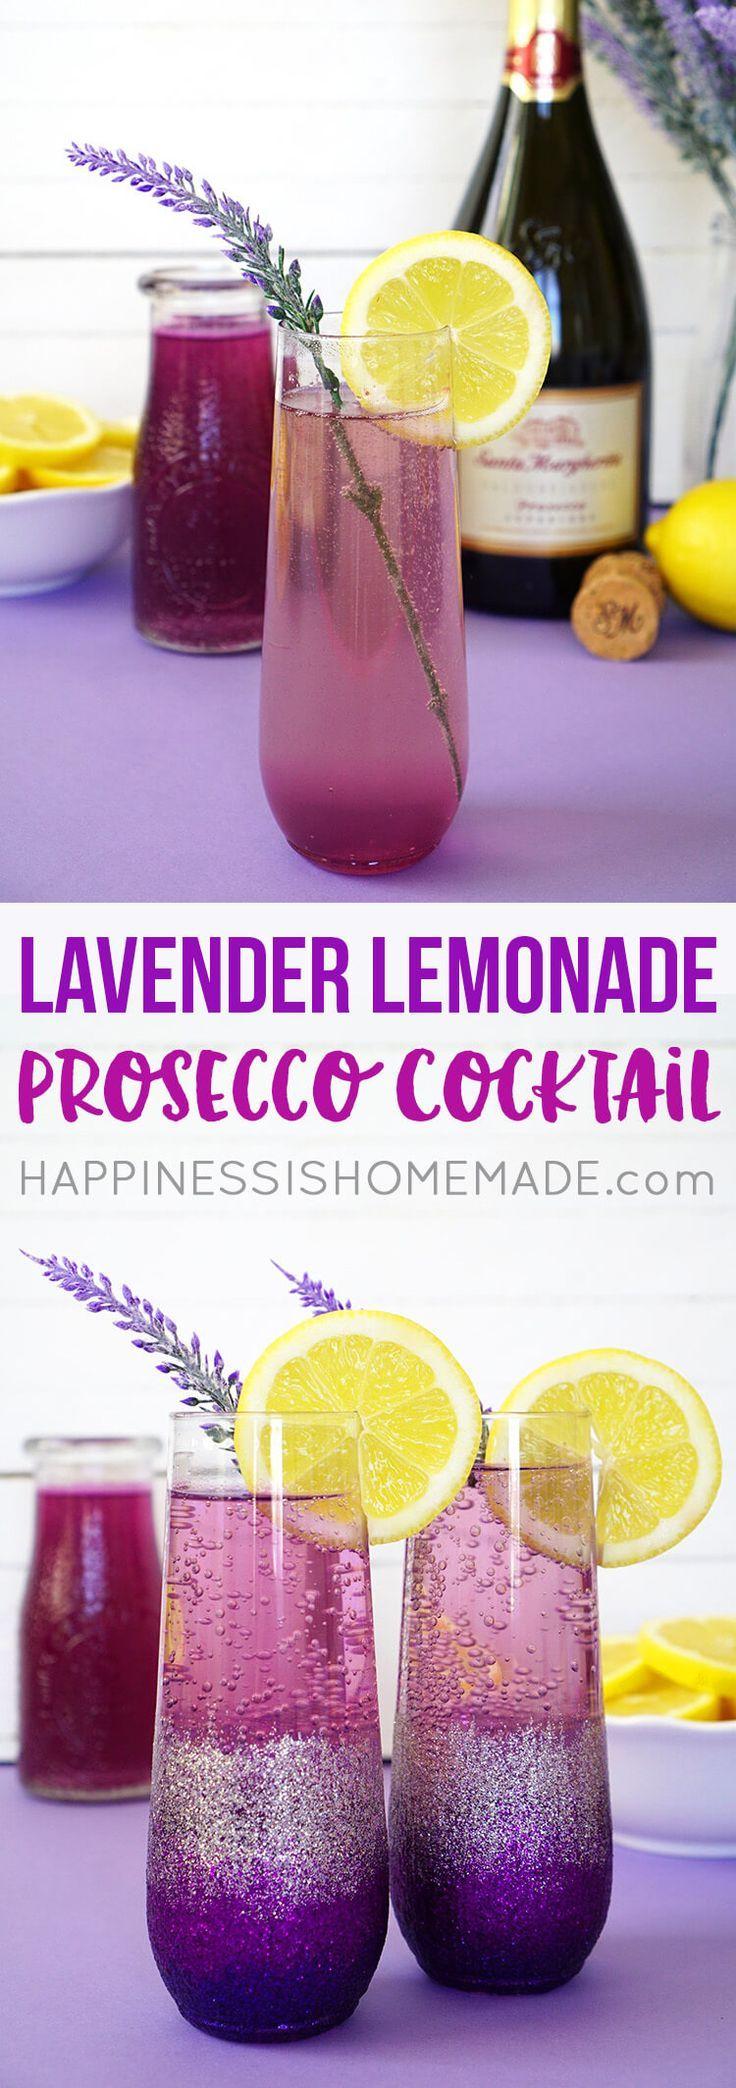 Wedding - Lavender Lemonade Prosecco Cocktail